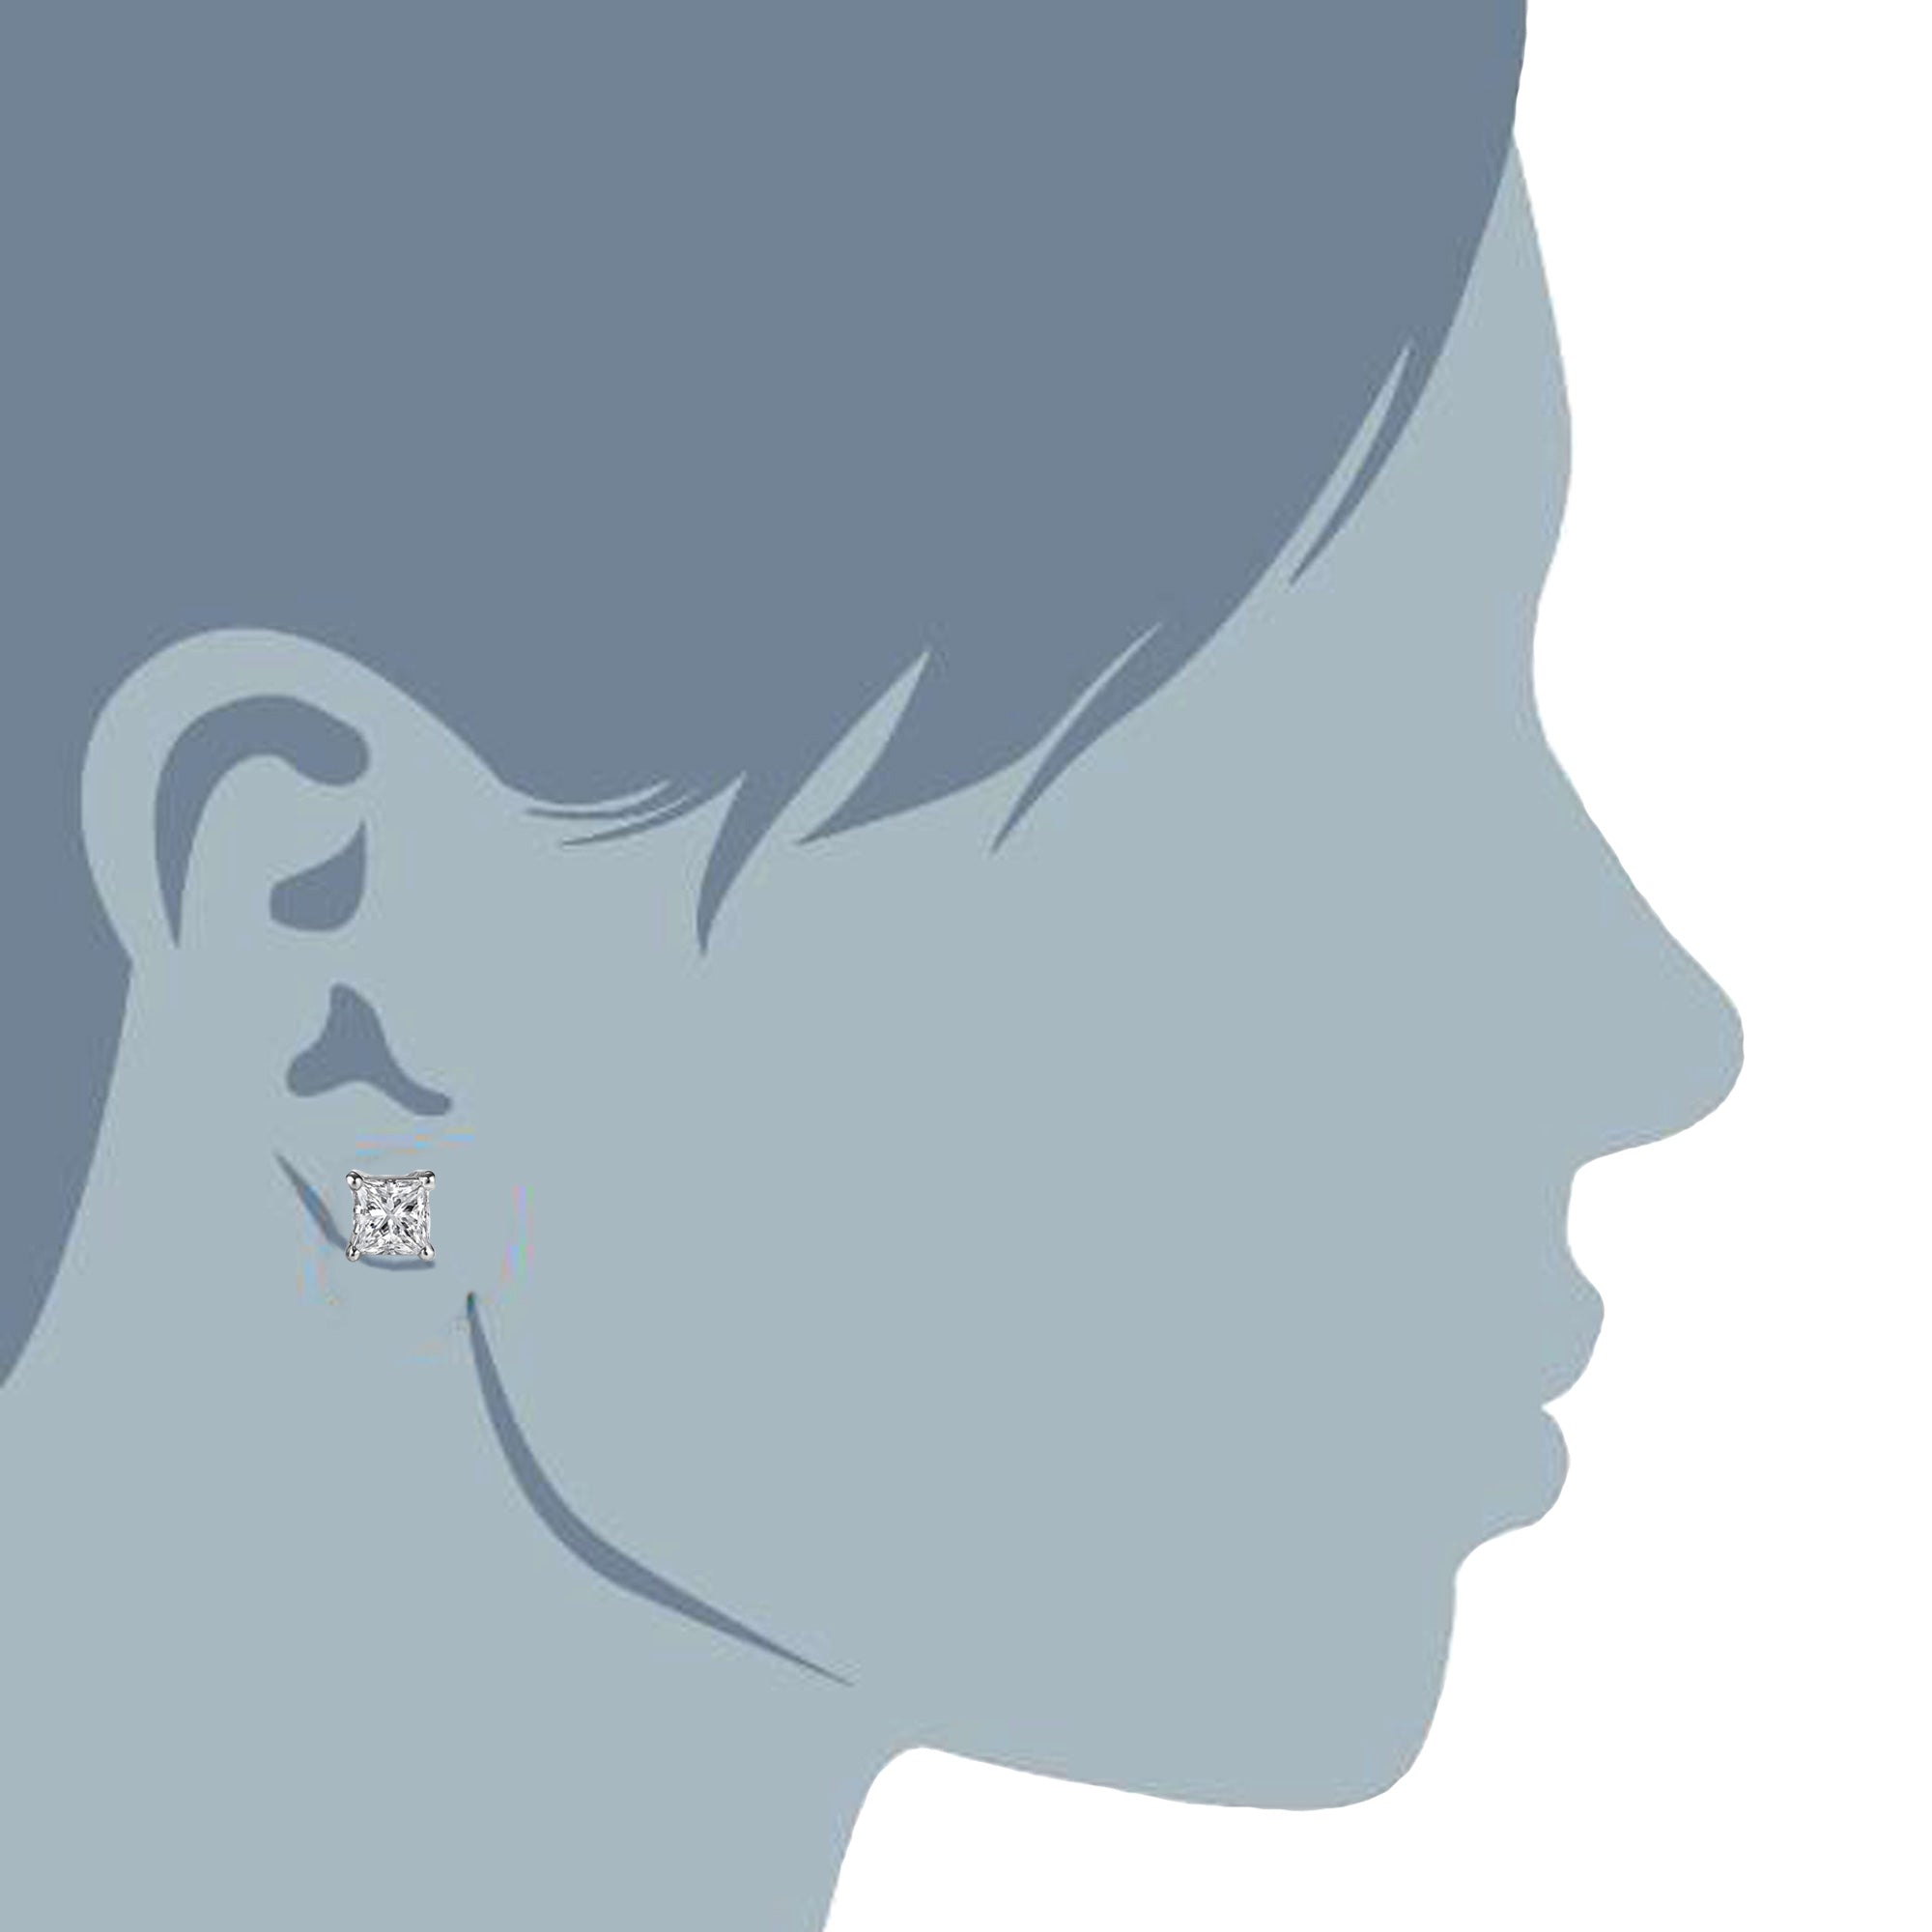 14k White Gold Princess Cut White Cubic Zirconia Stud Earrings fine designer jewelry for men and women